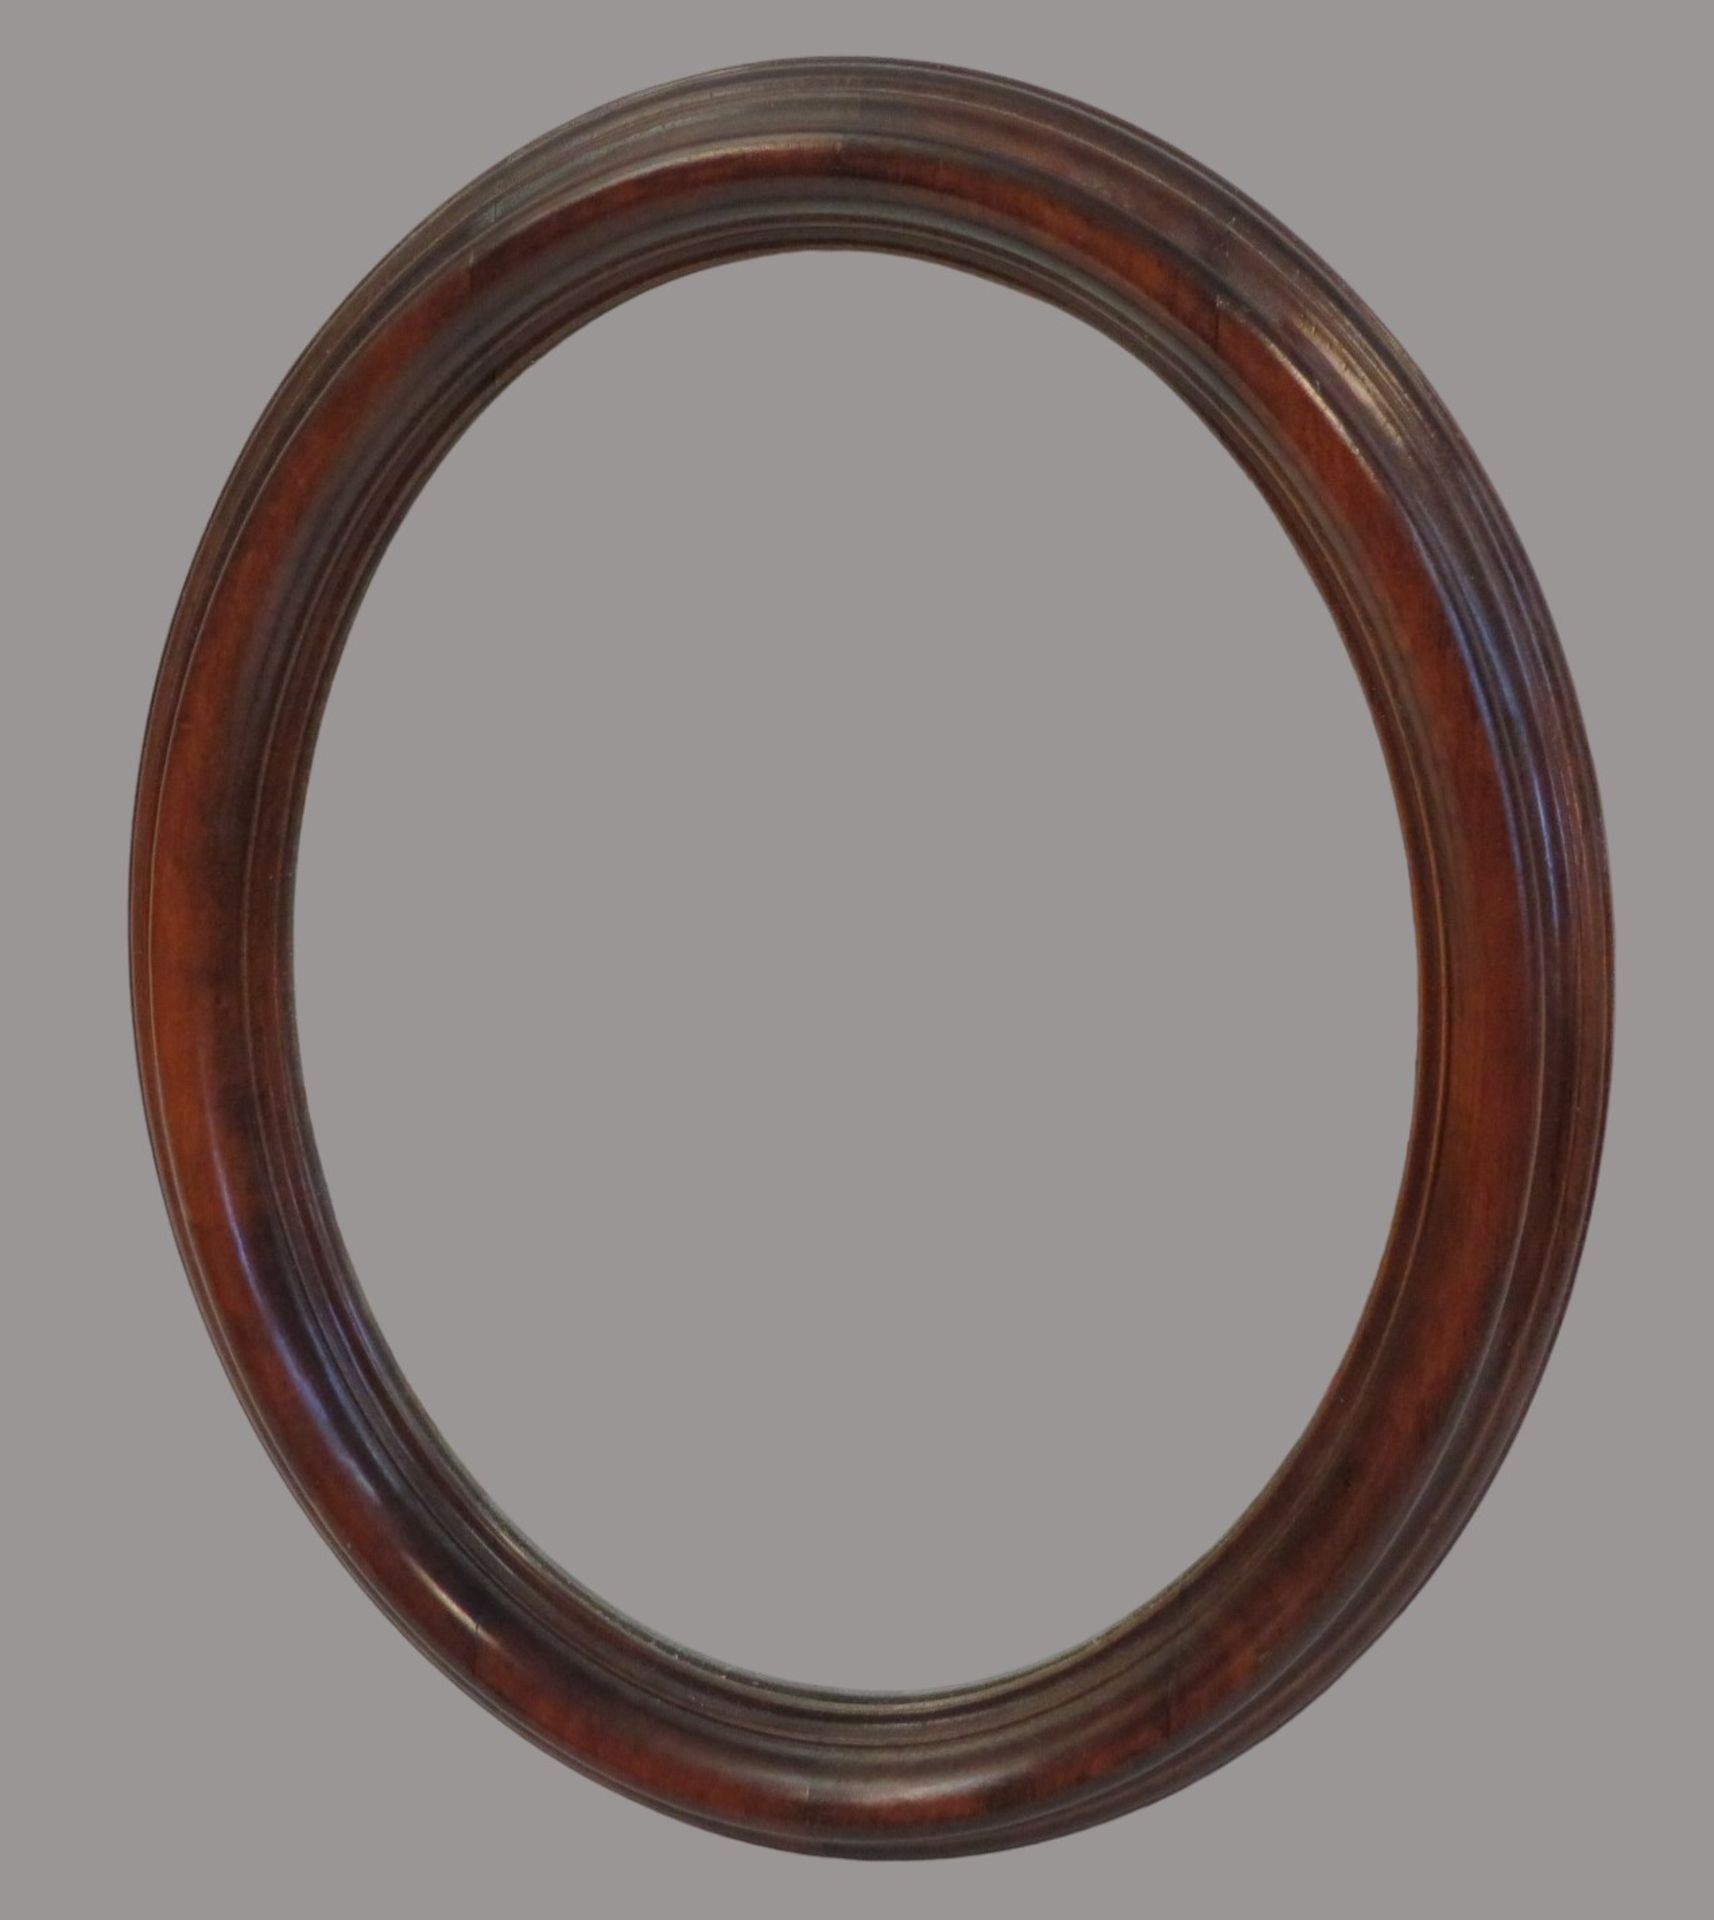 Ovaler Spiegel, Edelholz, 37 x 30 cm.